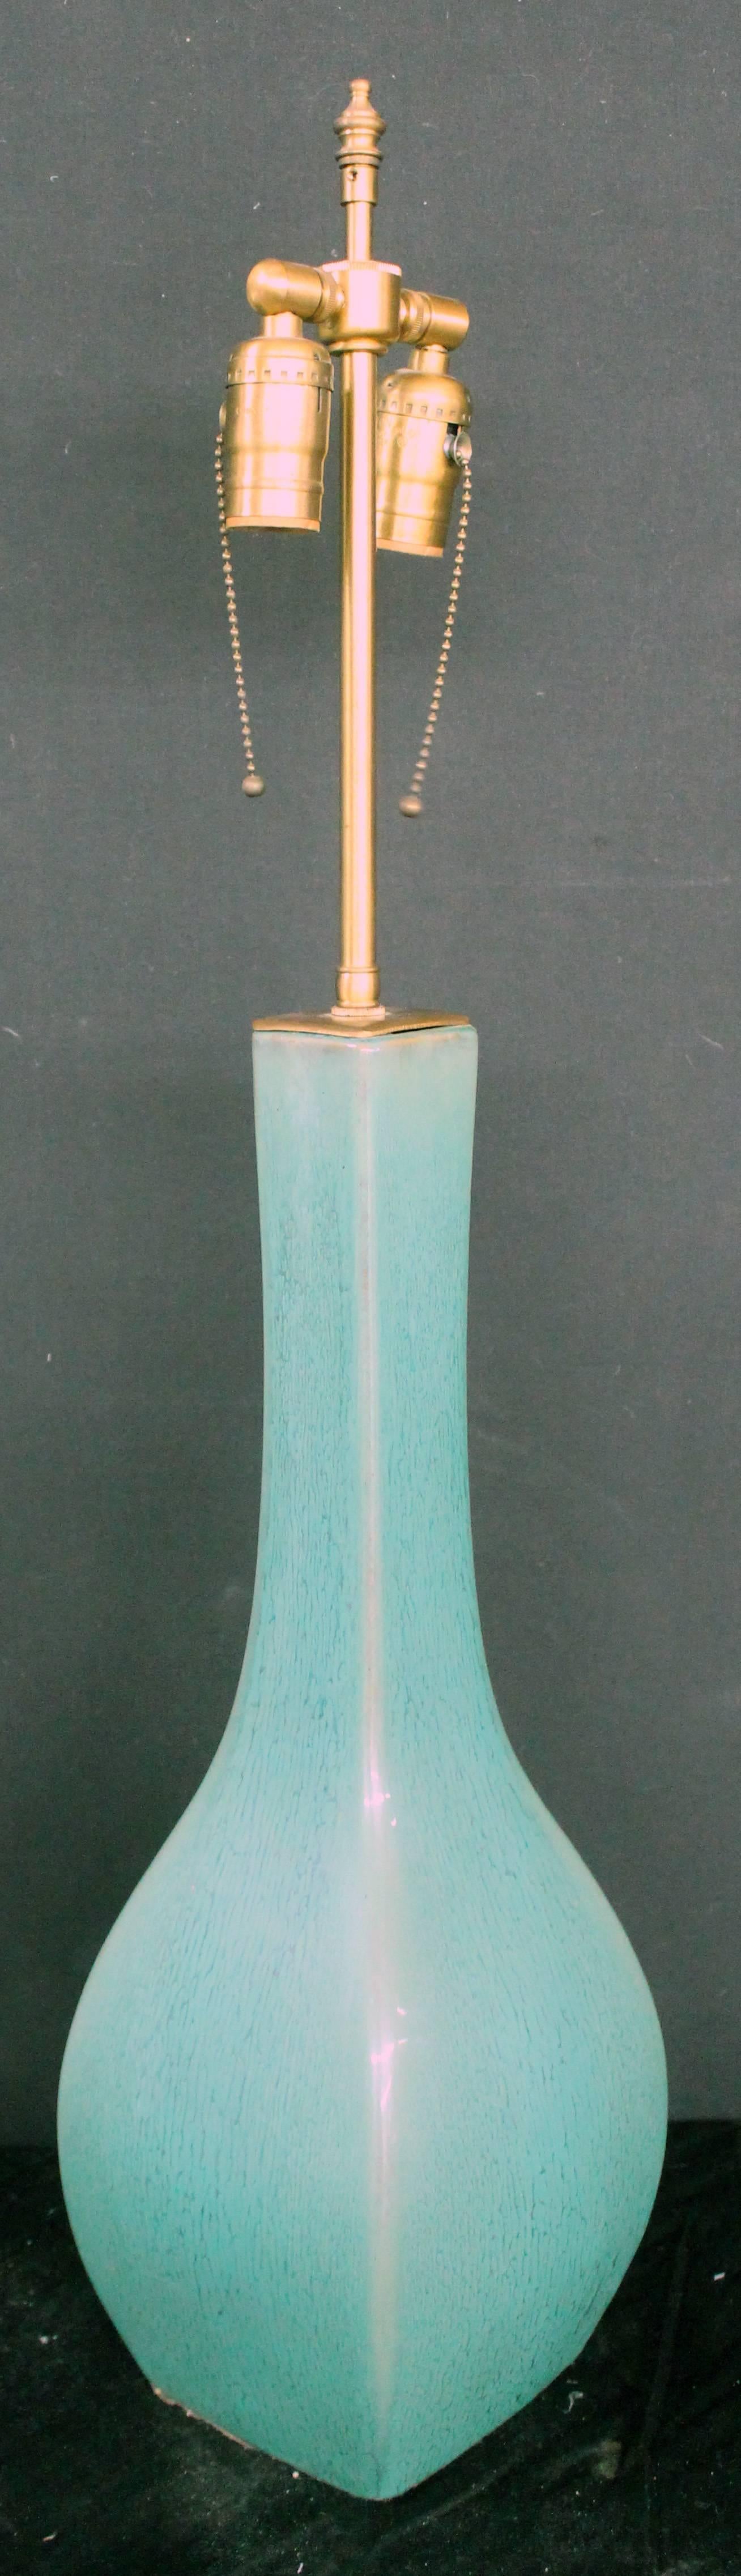 A long neck ceramic glazed vase with Lamp application.